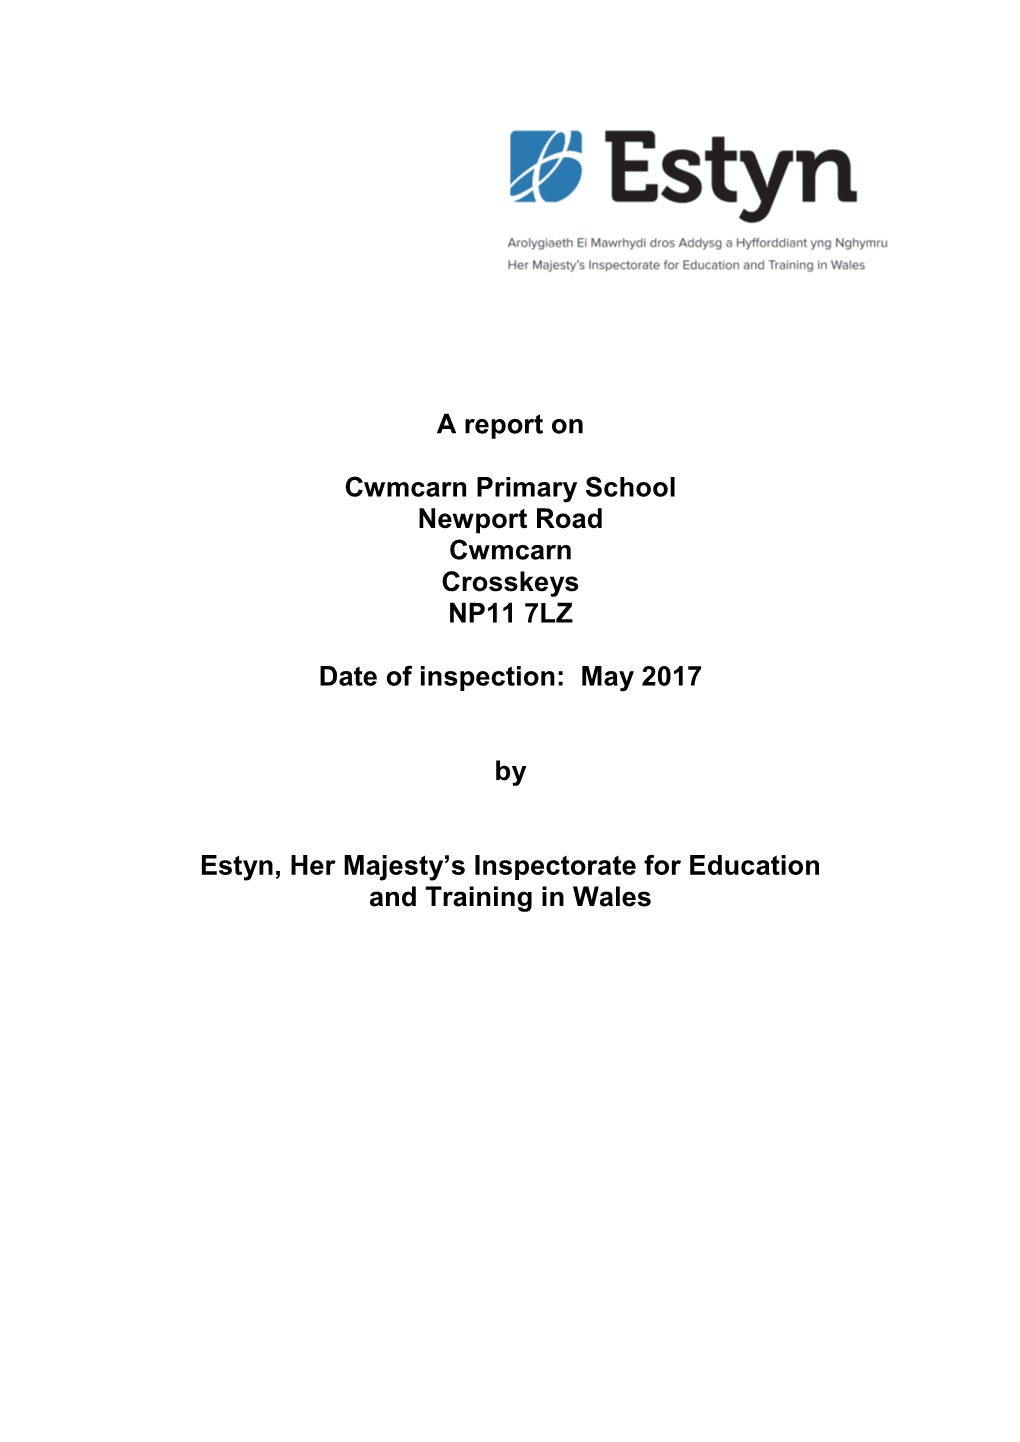 Inspection Report Cwmcarn Primary School 2017